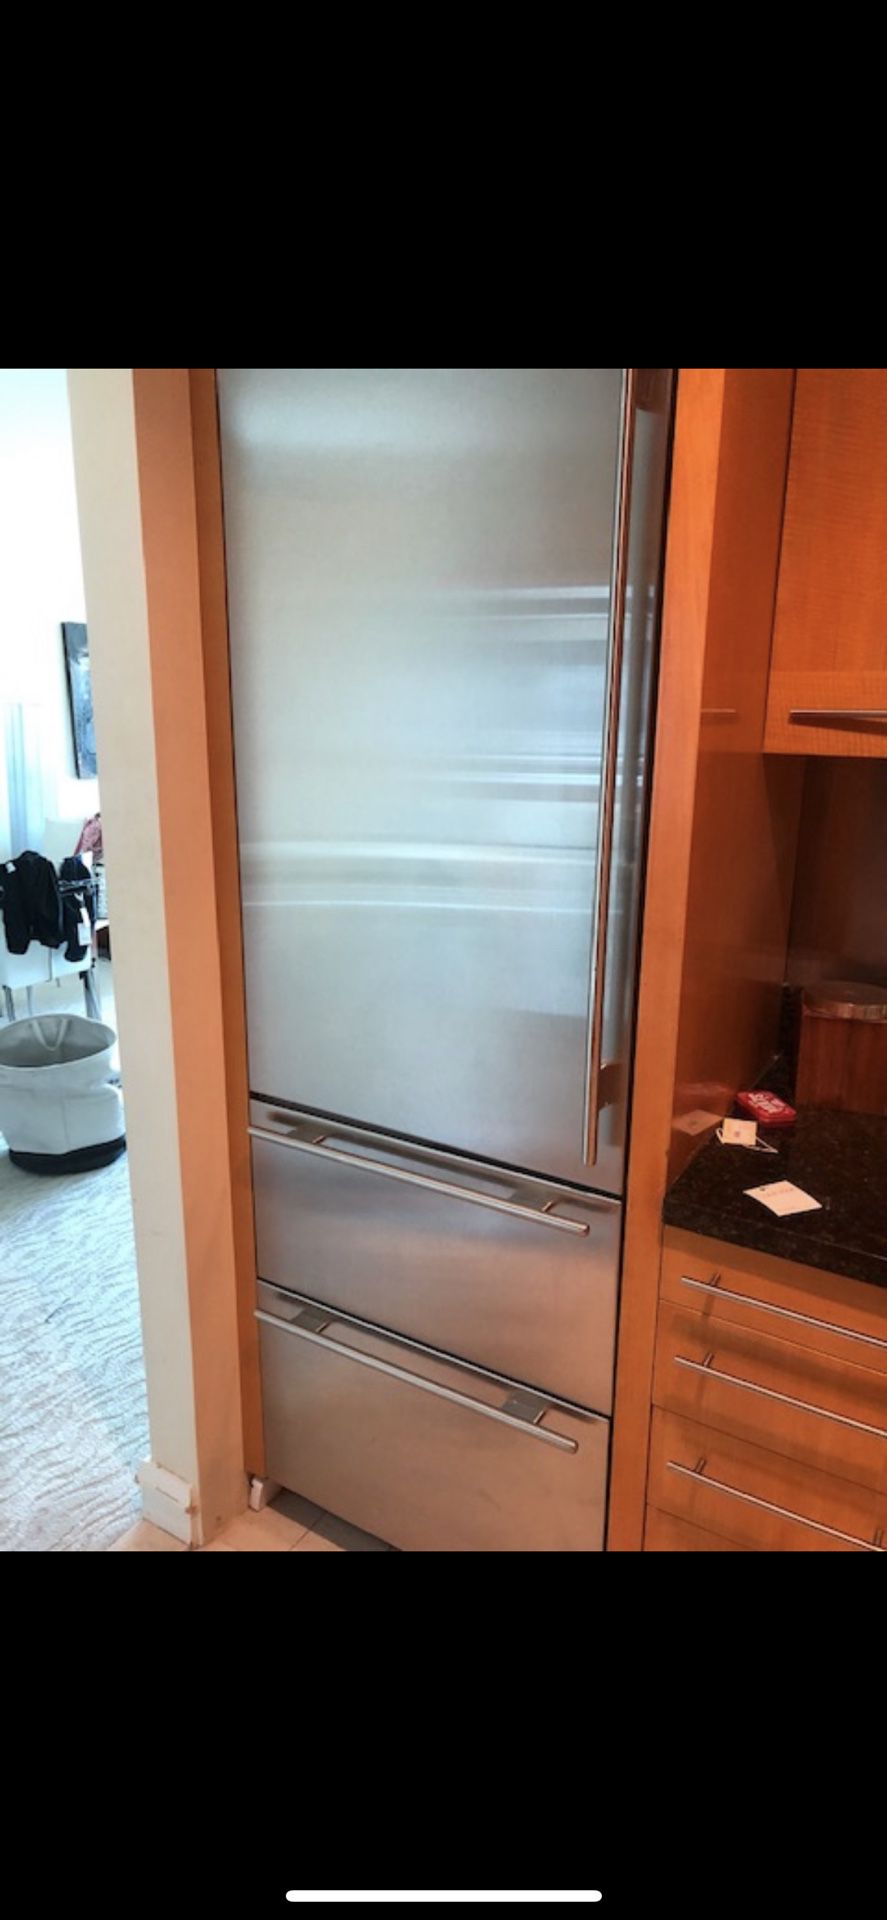 Sub-zero Refrigerator 